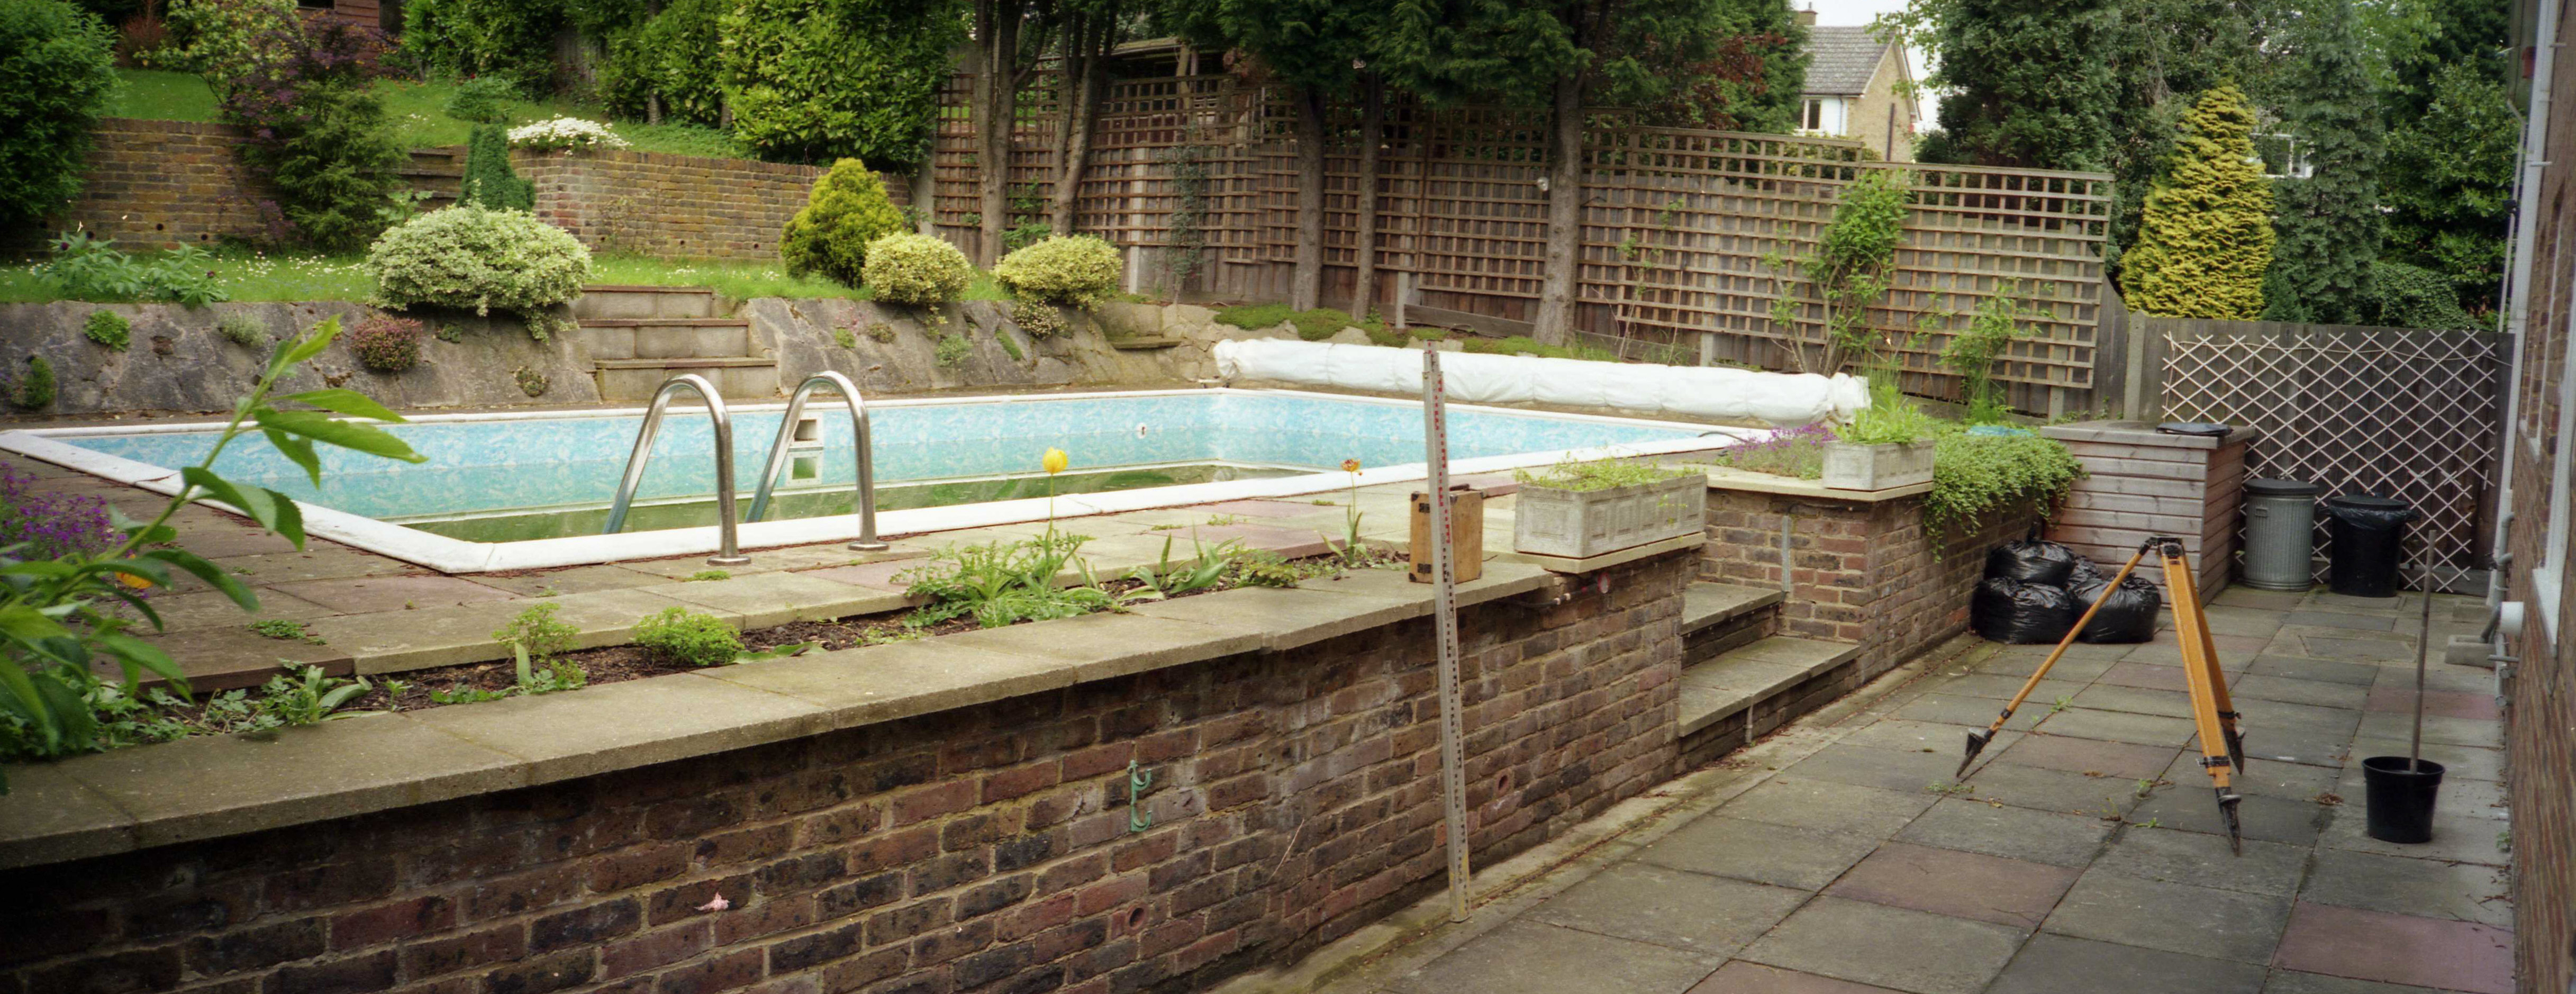 Swimming Pool Backyard Garden